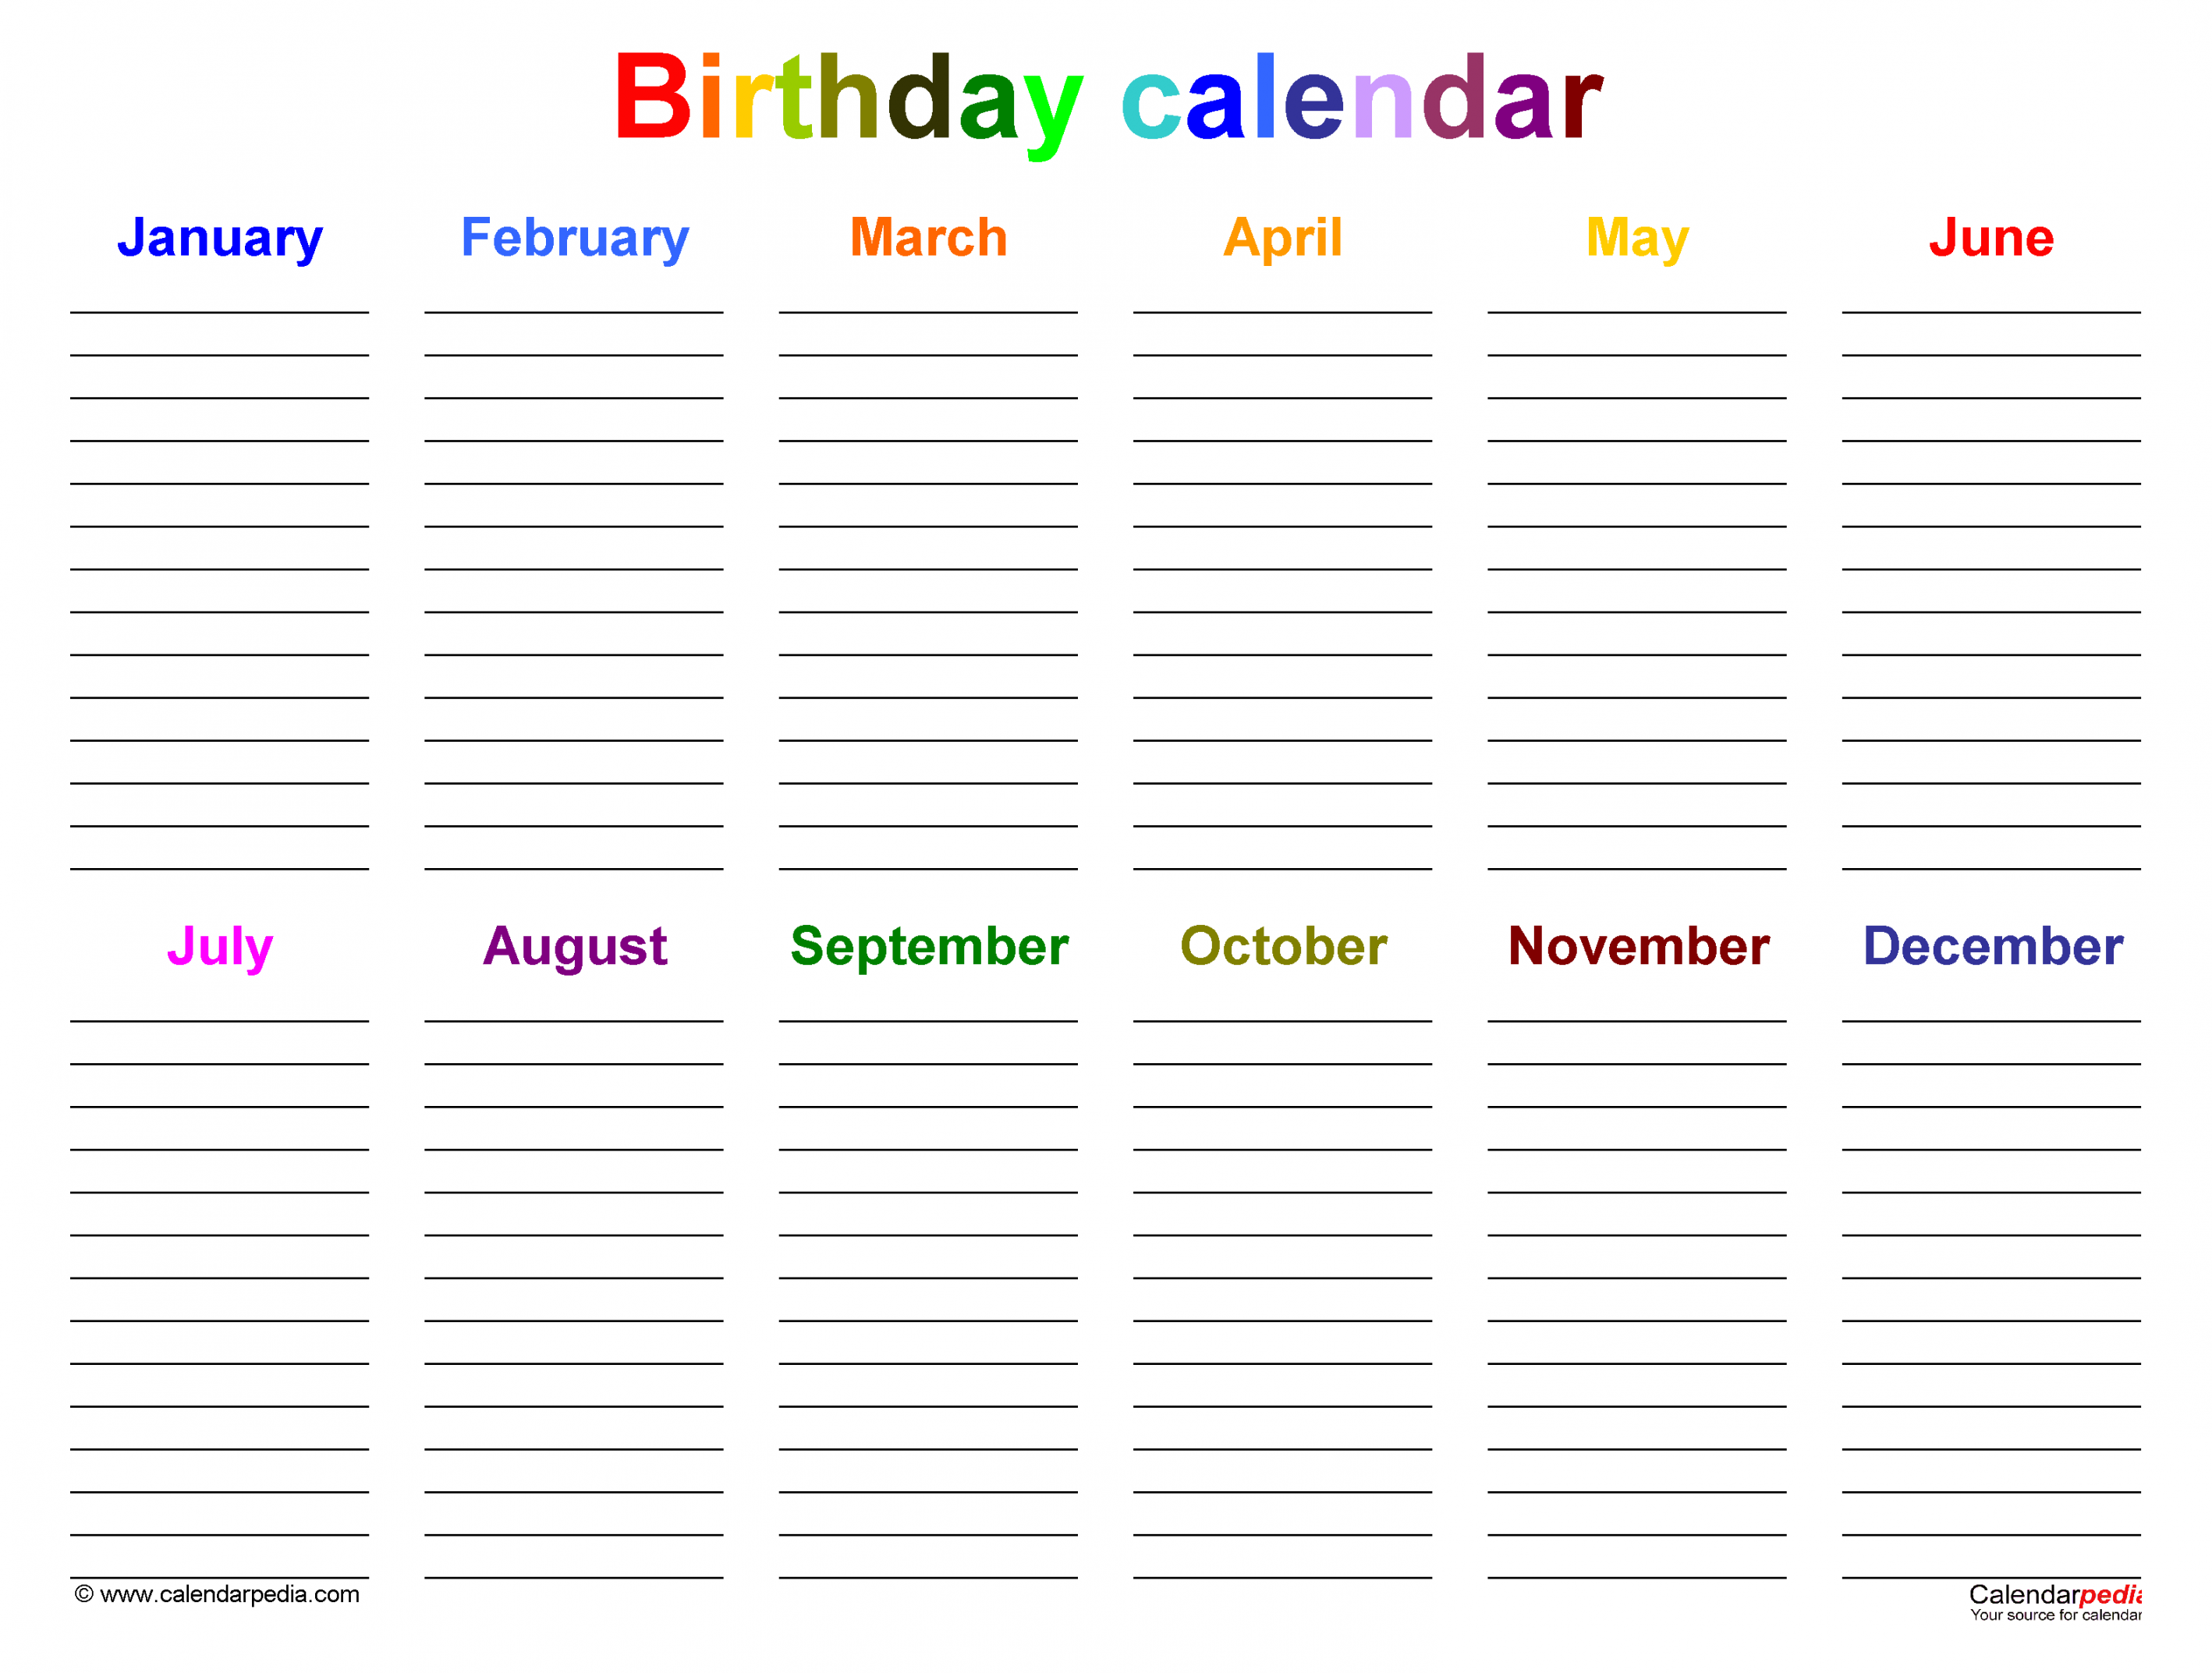 Birthday calendars - Free Printable Microsoft Word templates